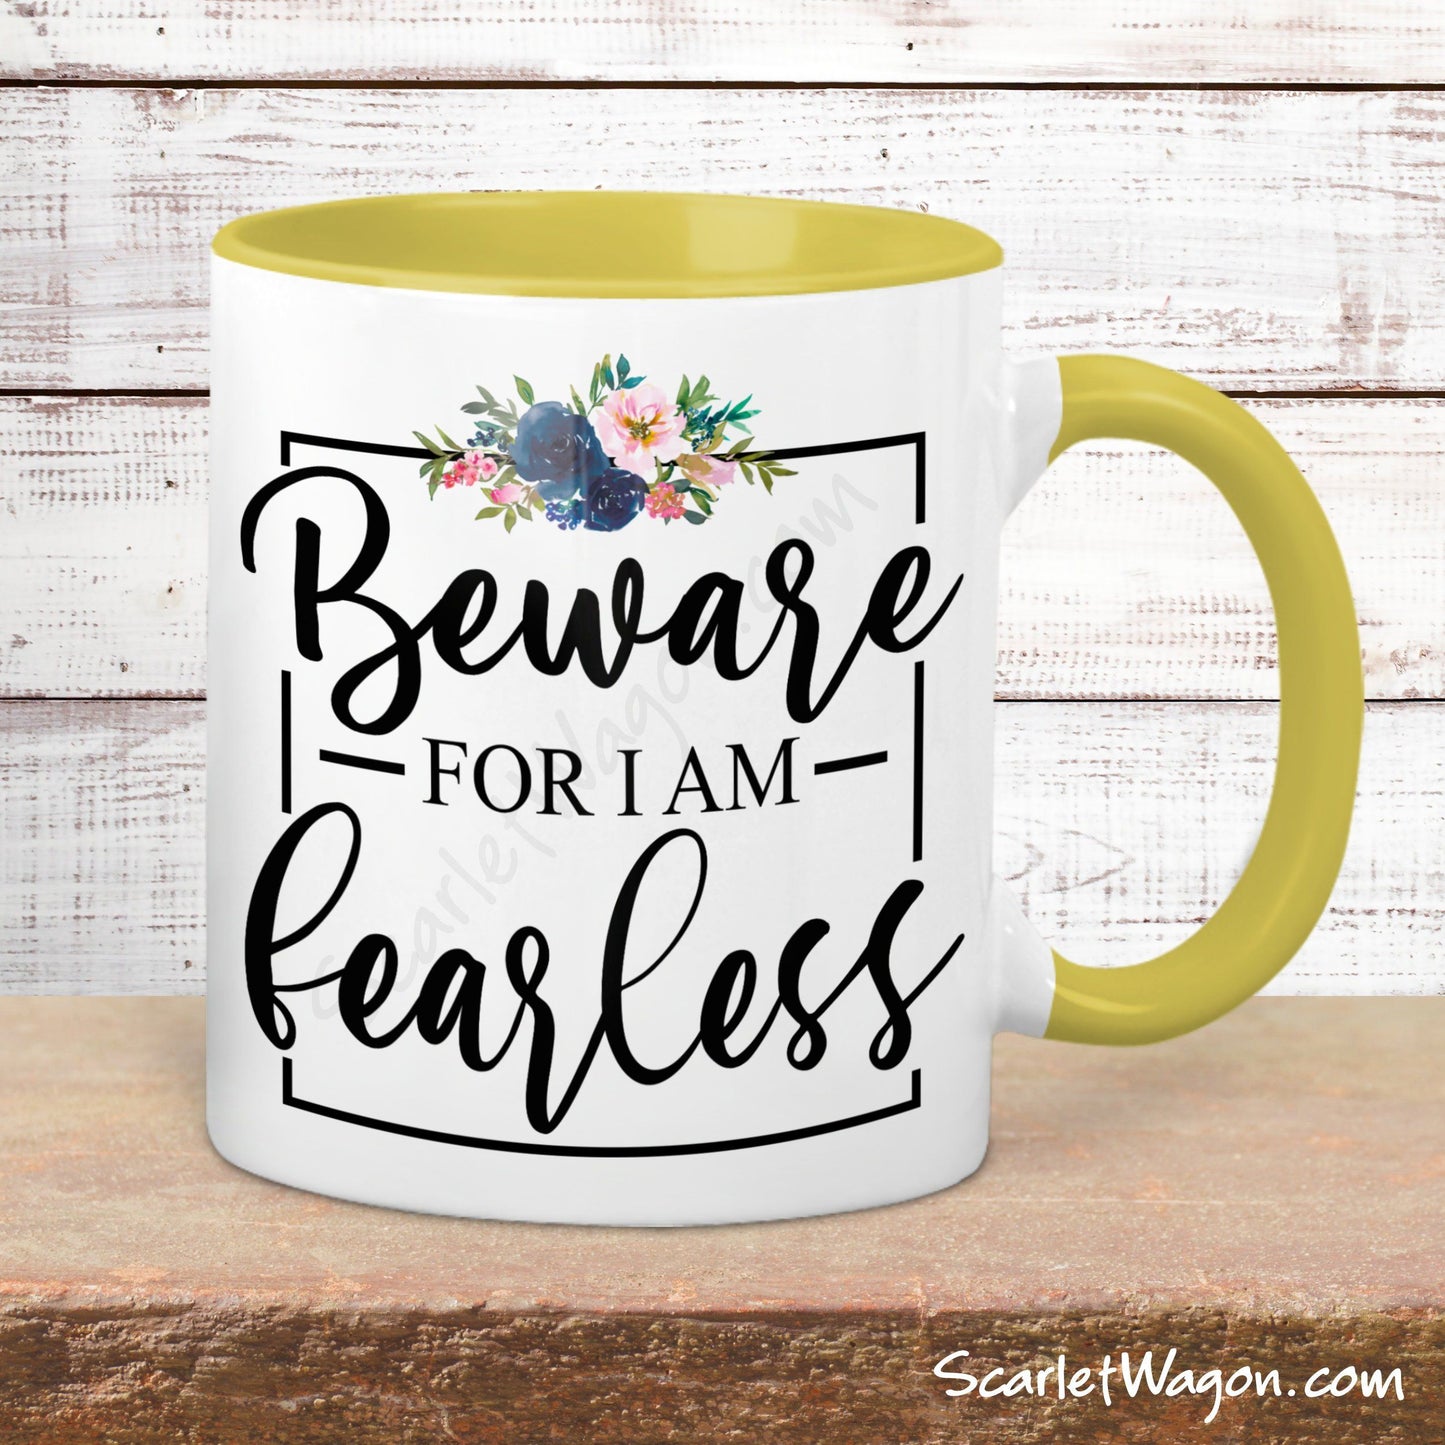 Beware for I am Fearless Coffee Mug mug The Scarlet Wagon Boutique 11 ounce Yellow 